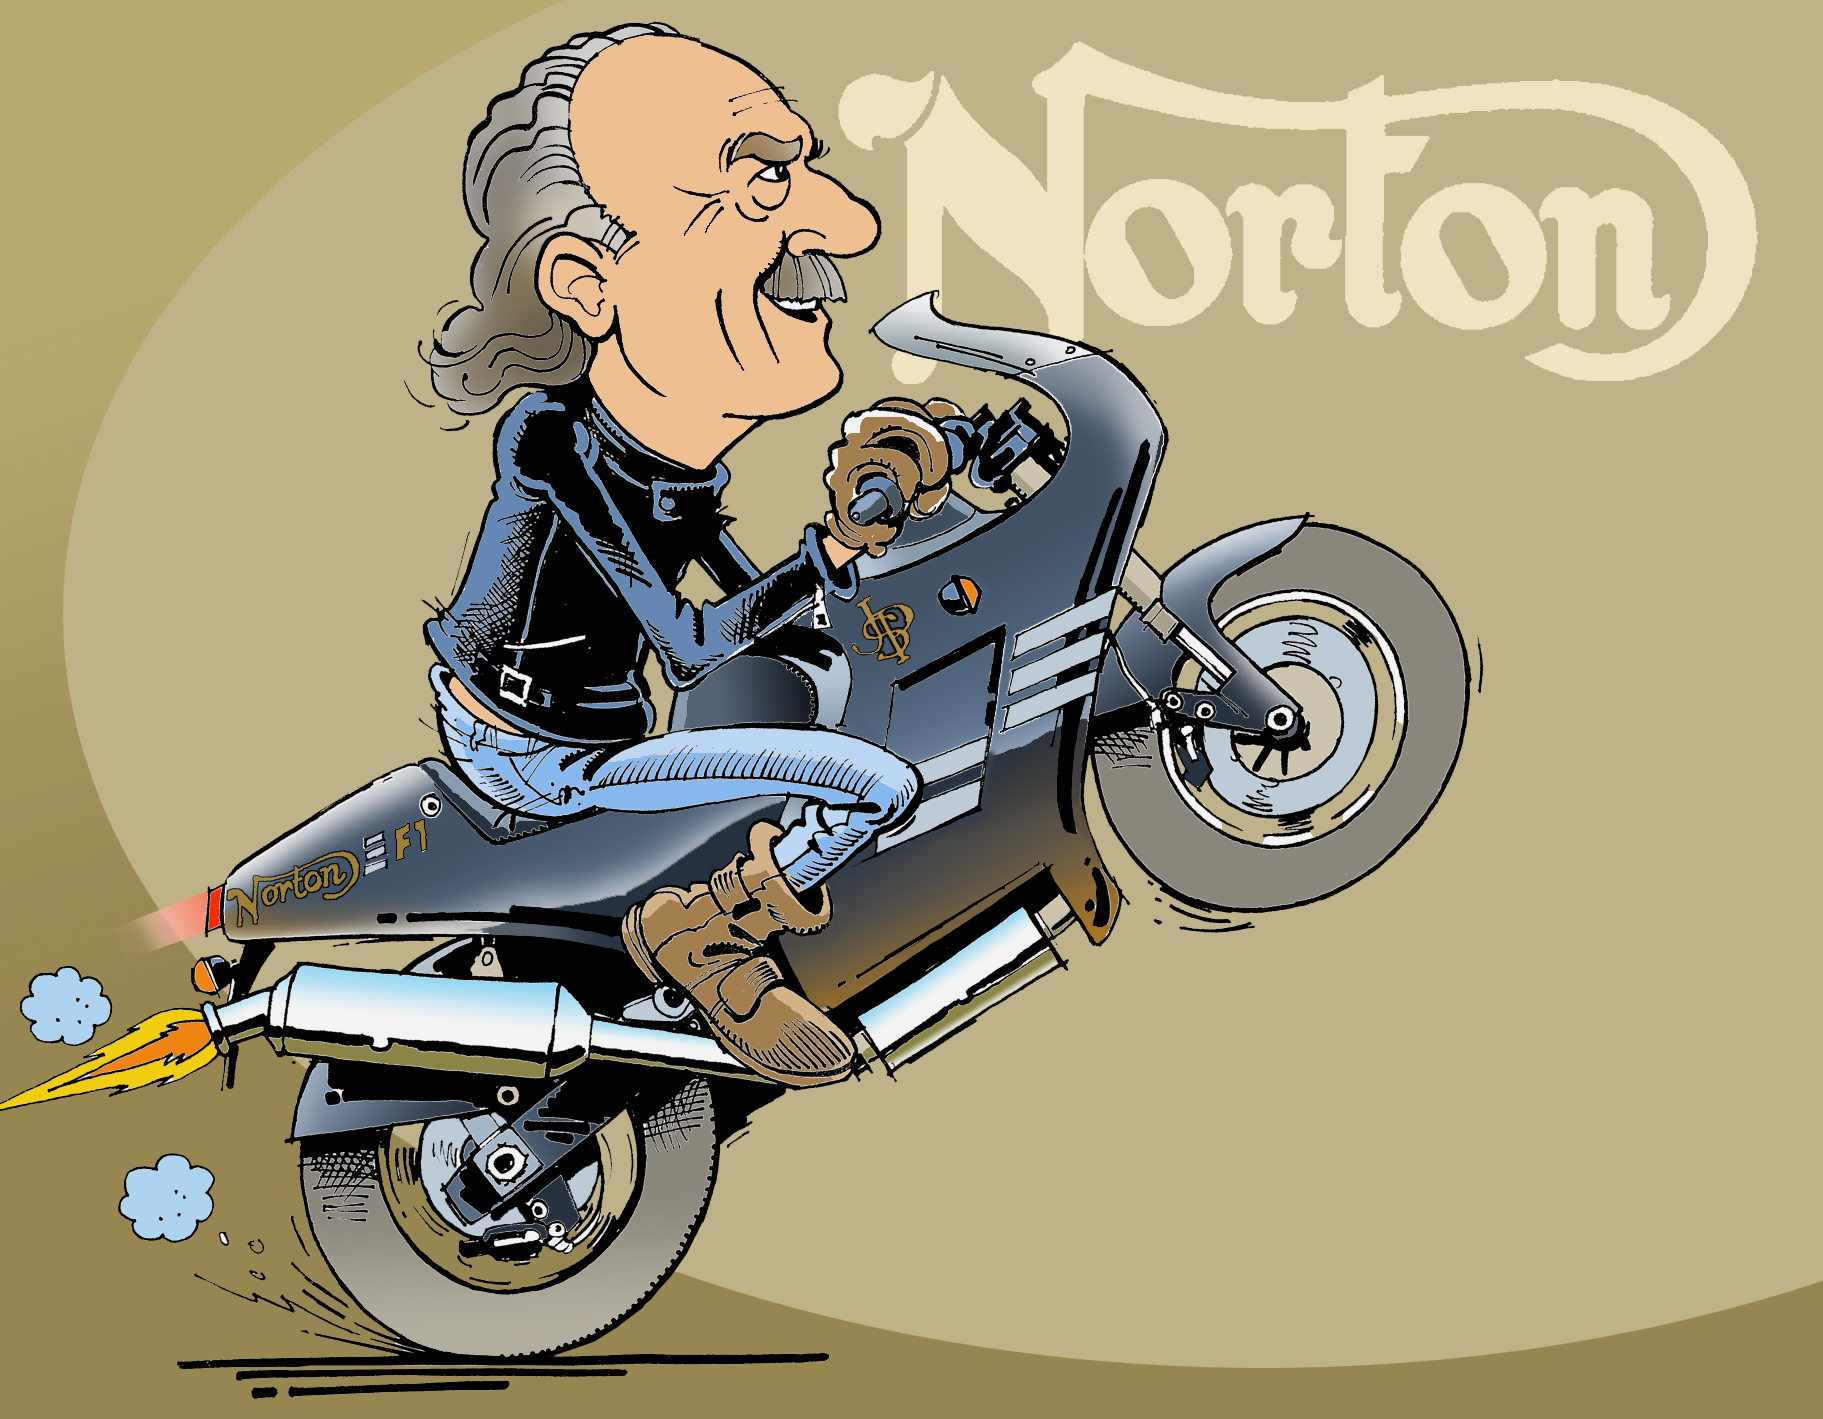 Norton F1